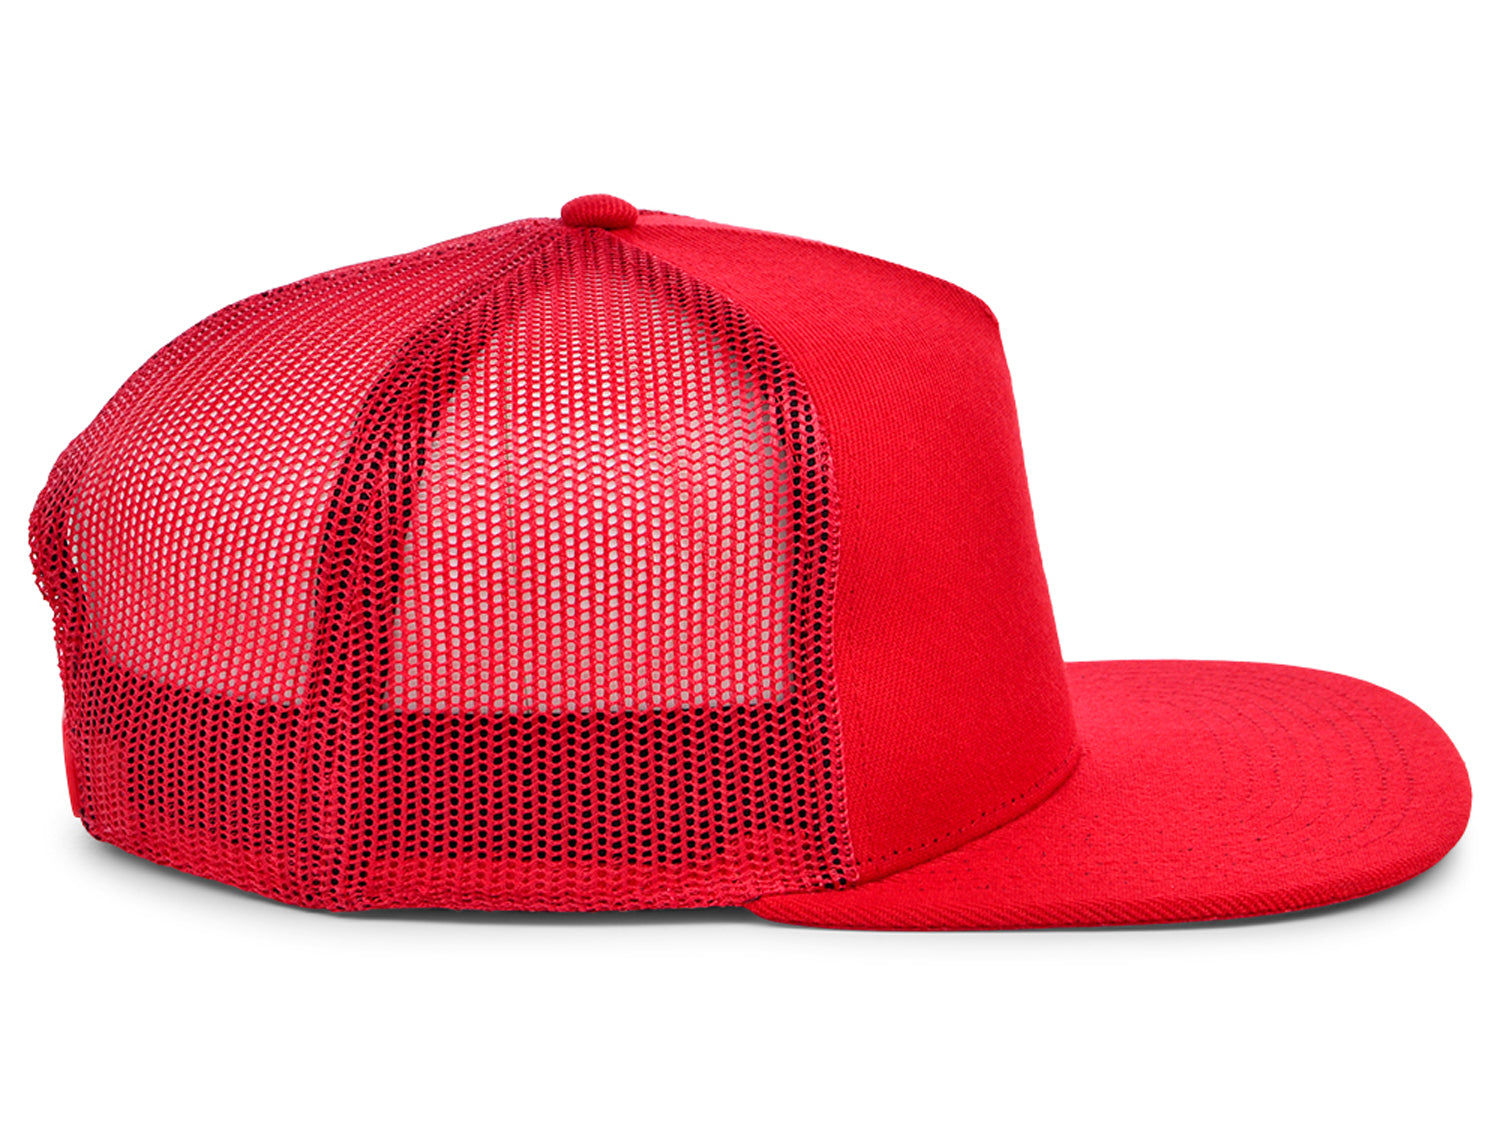 baseball caps 5 panels crown hats mesh hats sports caps embroidery hats